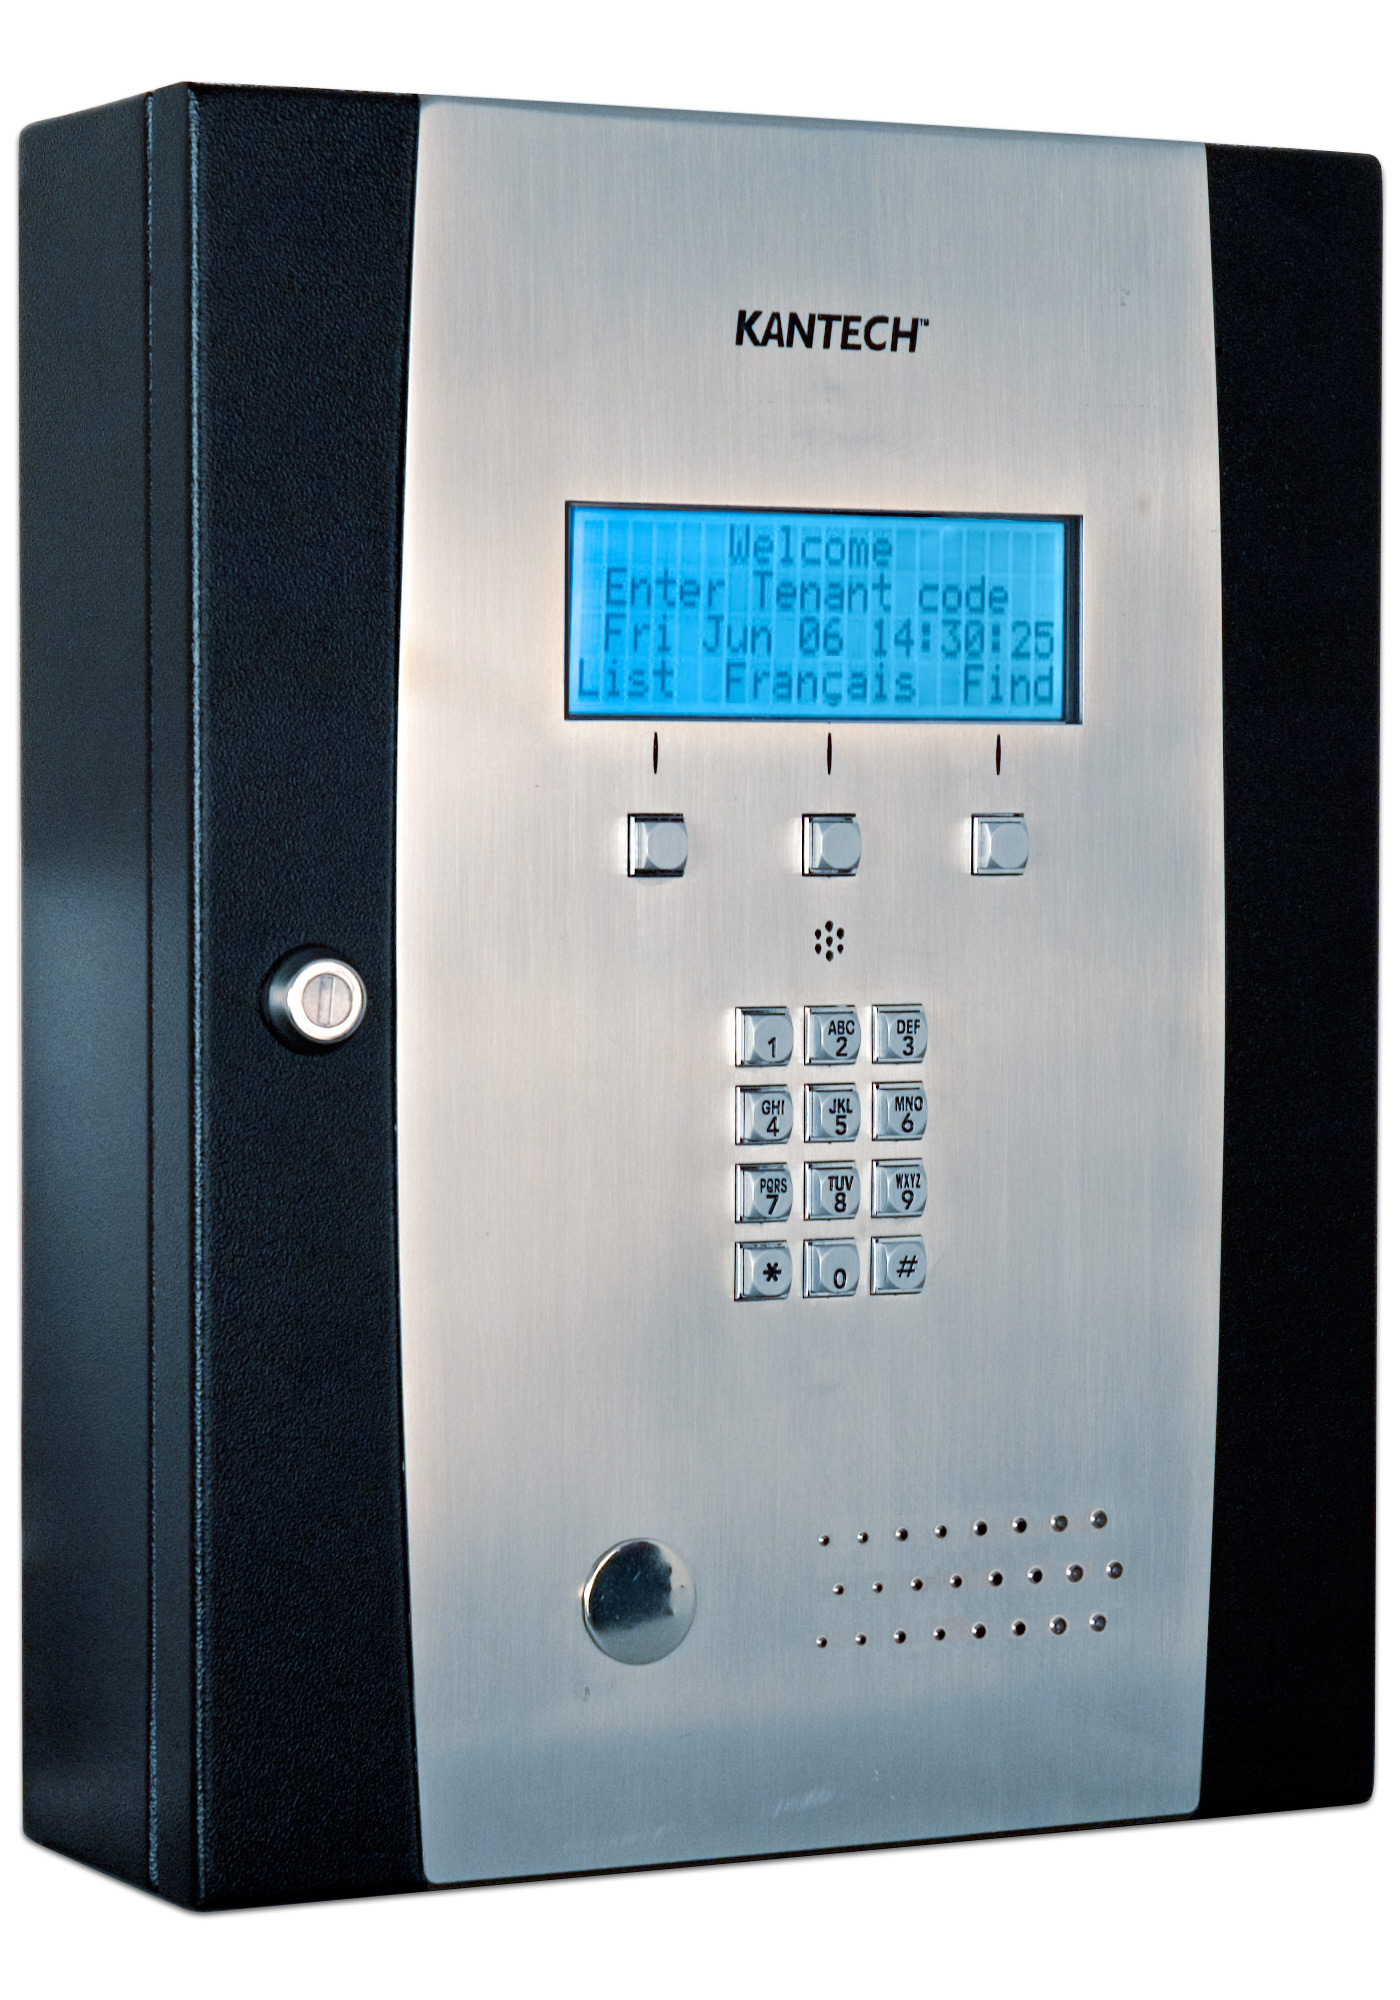 Kantech Telephone Entry